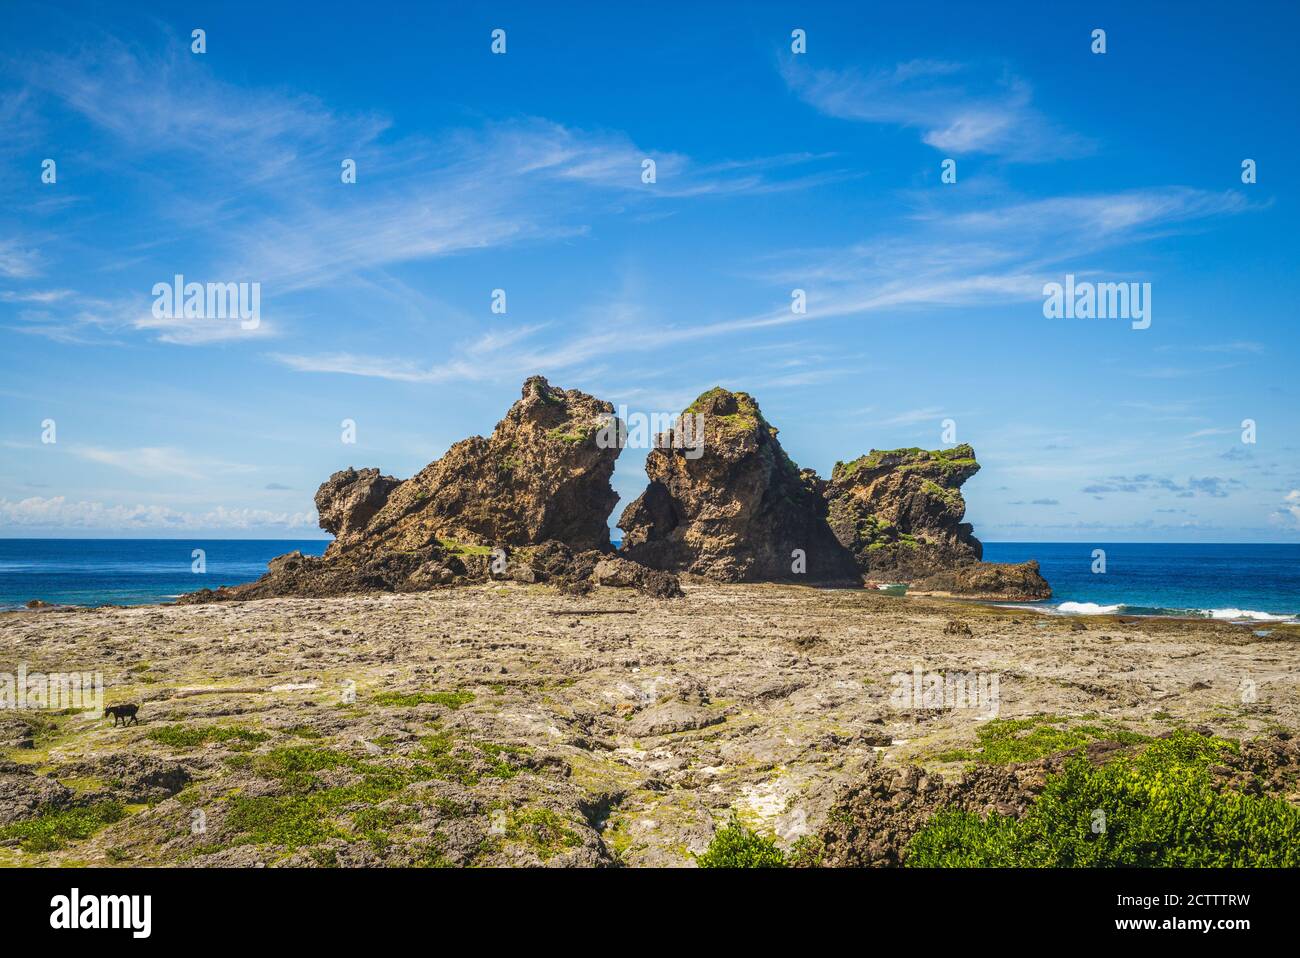 Lion Couple Rock at Lanyu island, taitung, taiwan Stock Photo